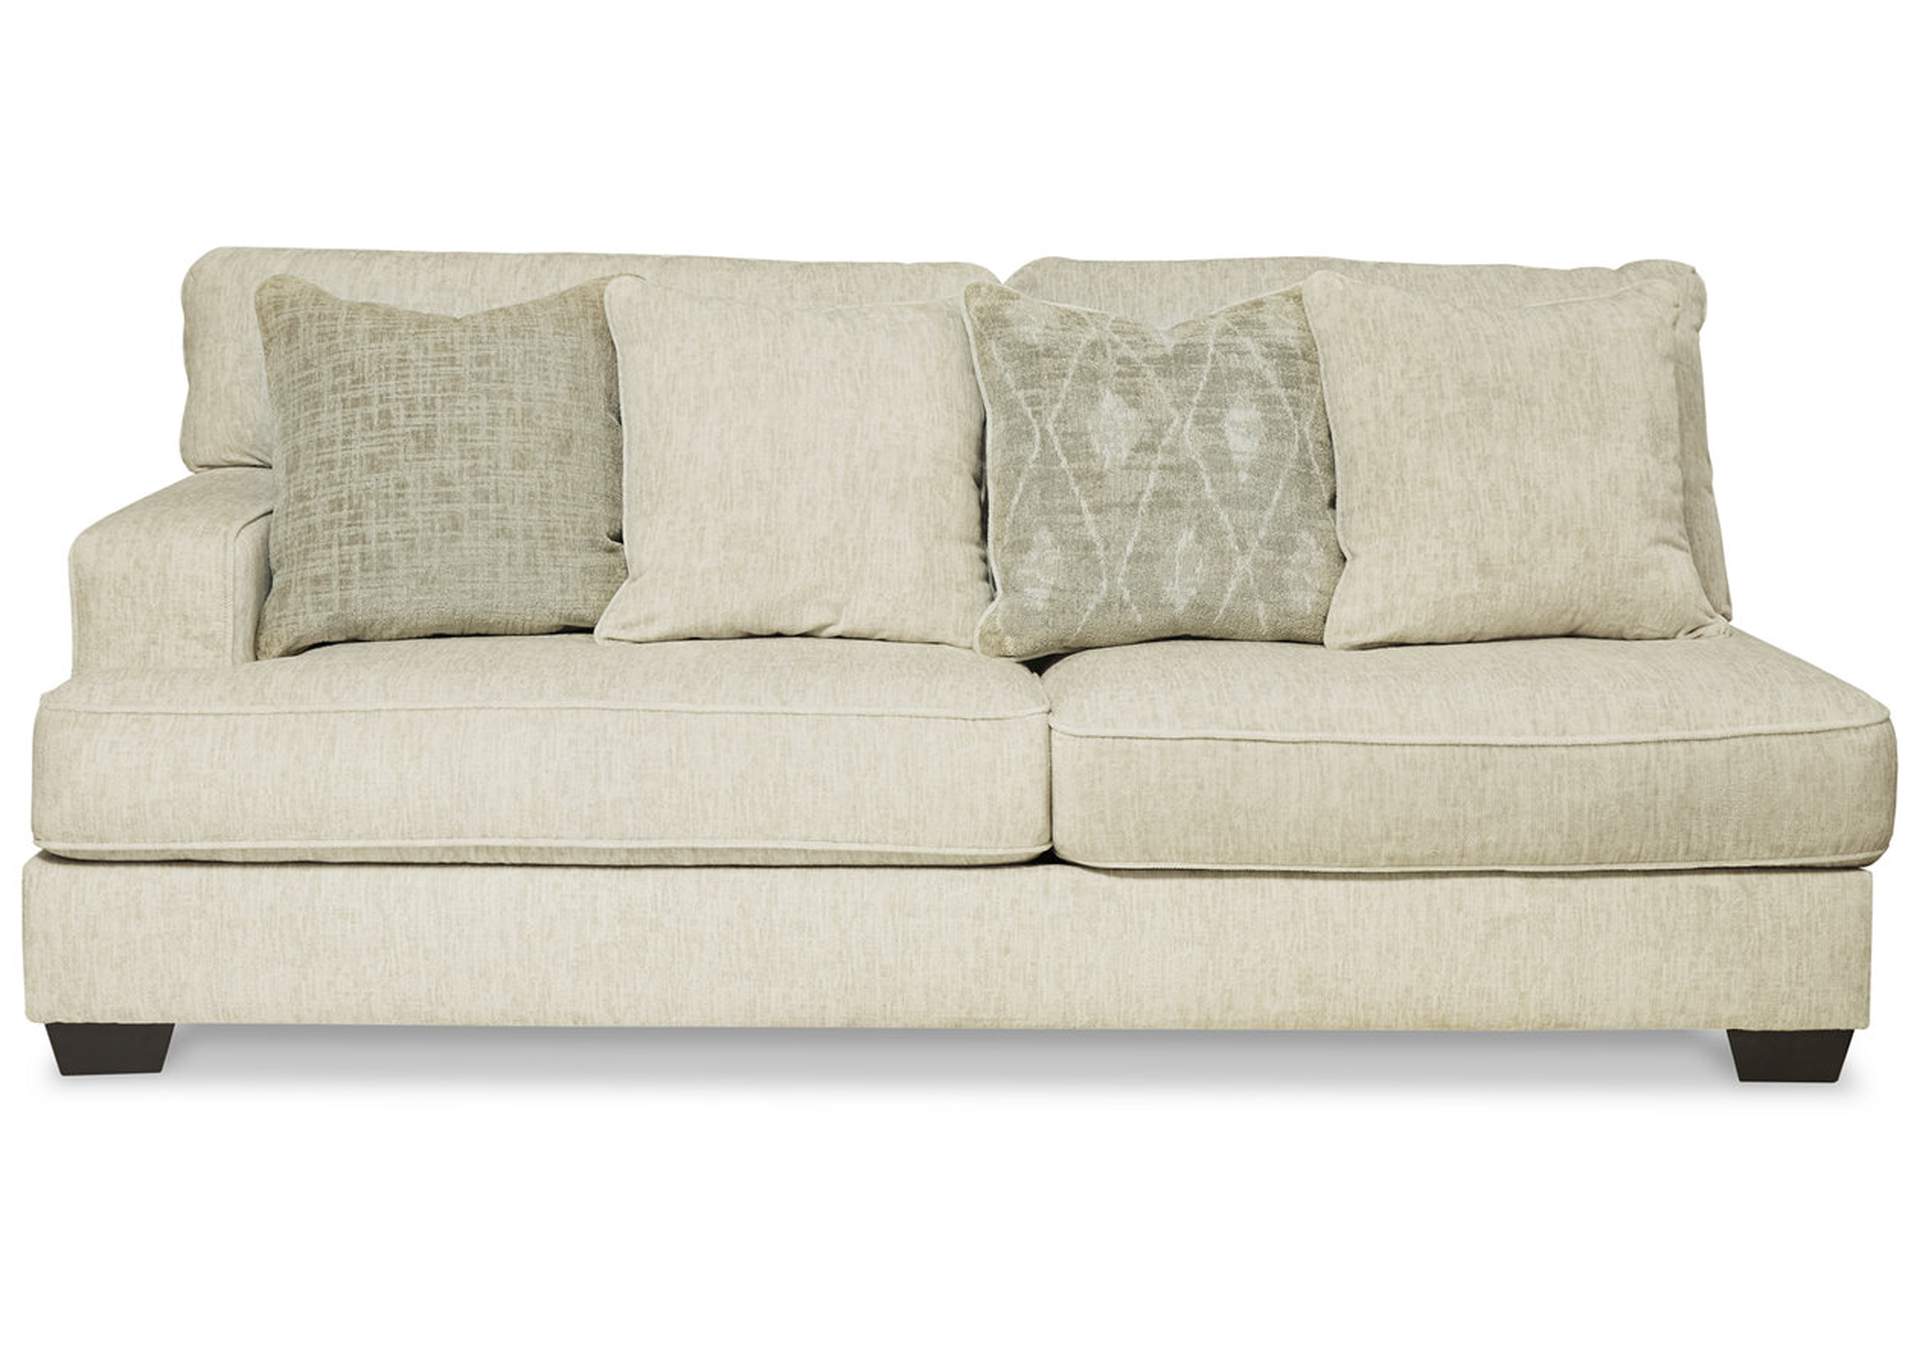 Rawcliffe Left-Arm Facing Sofa,Signature Design By Ashley